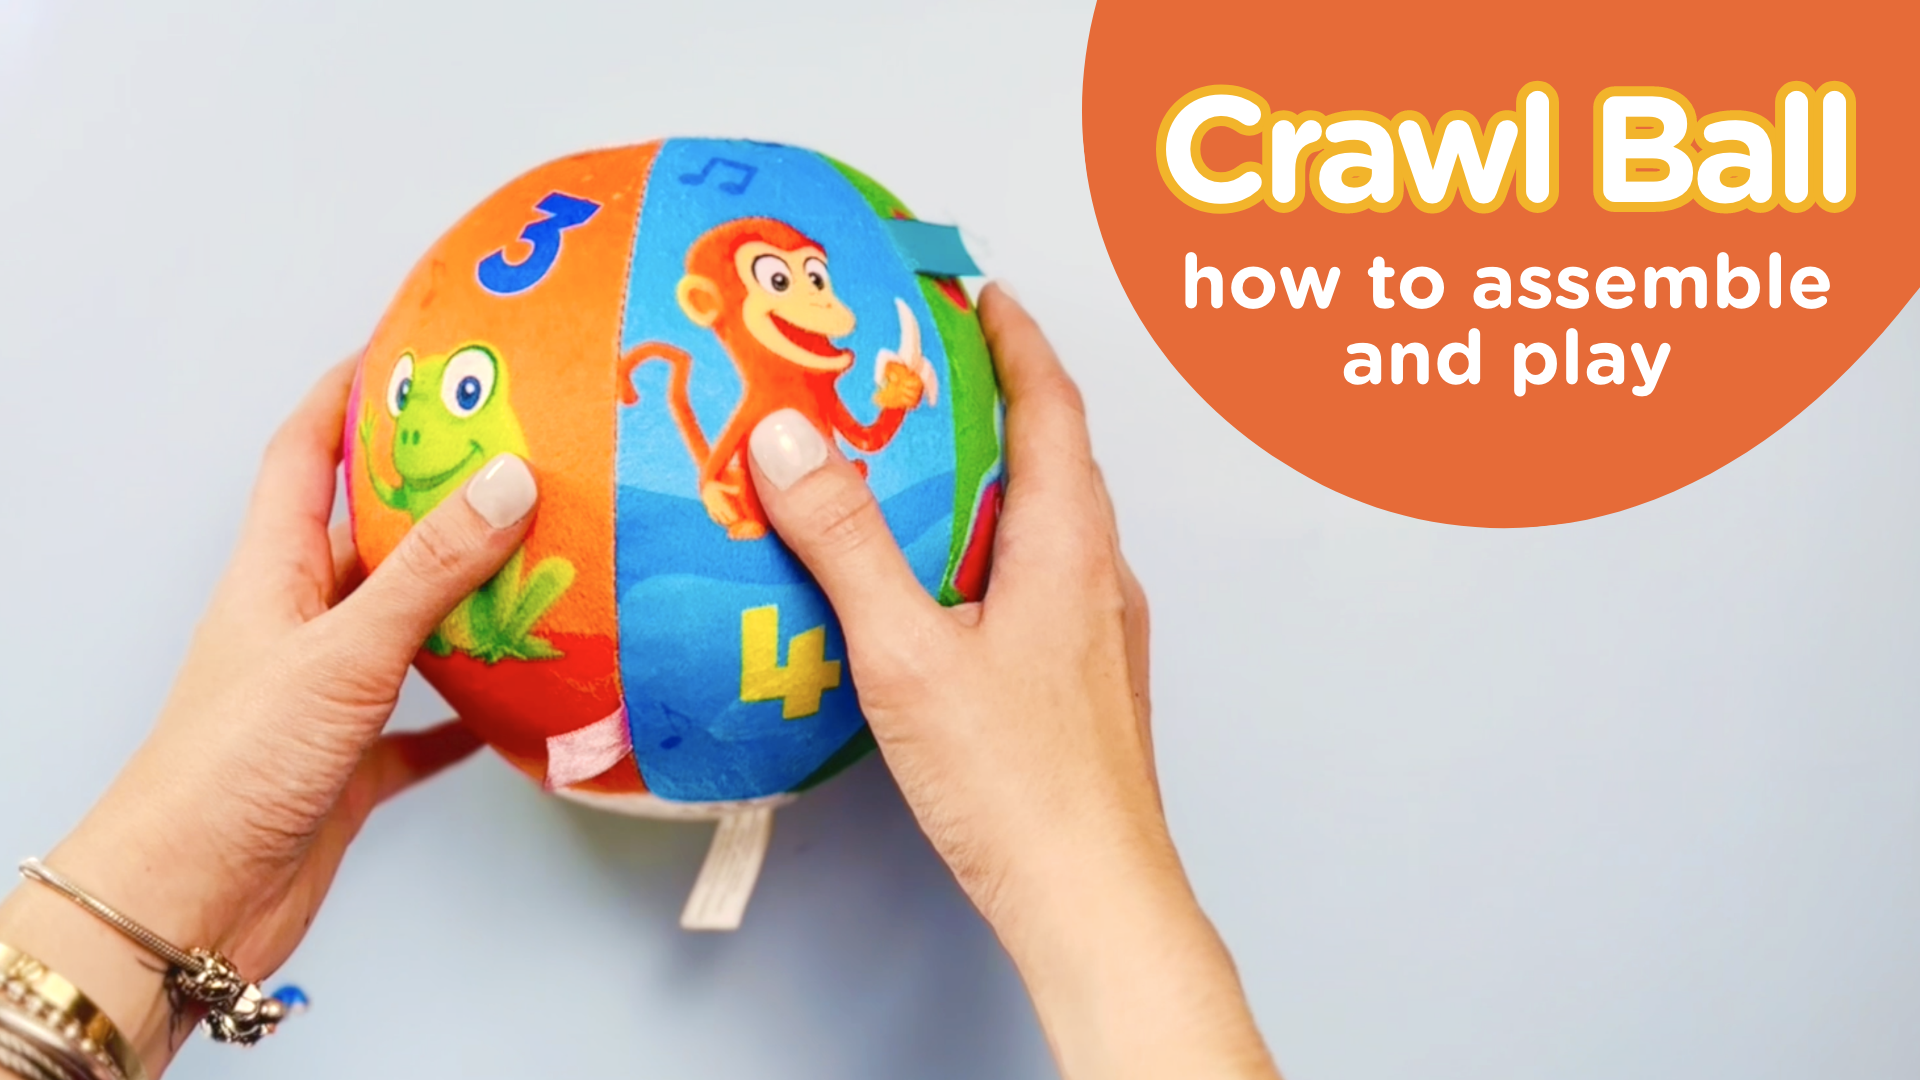 Load video: Crawl Ball